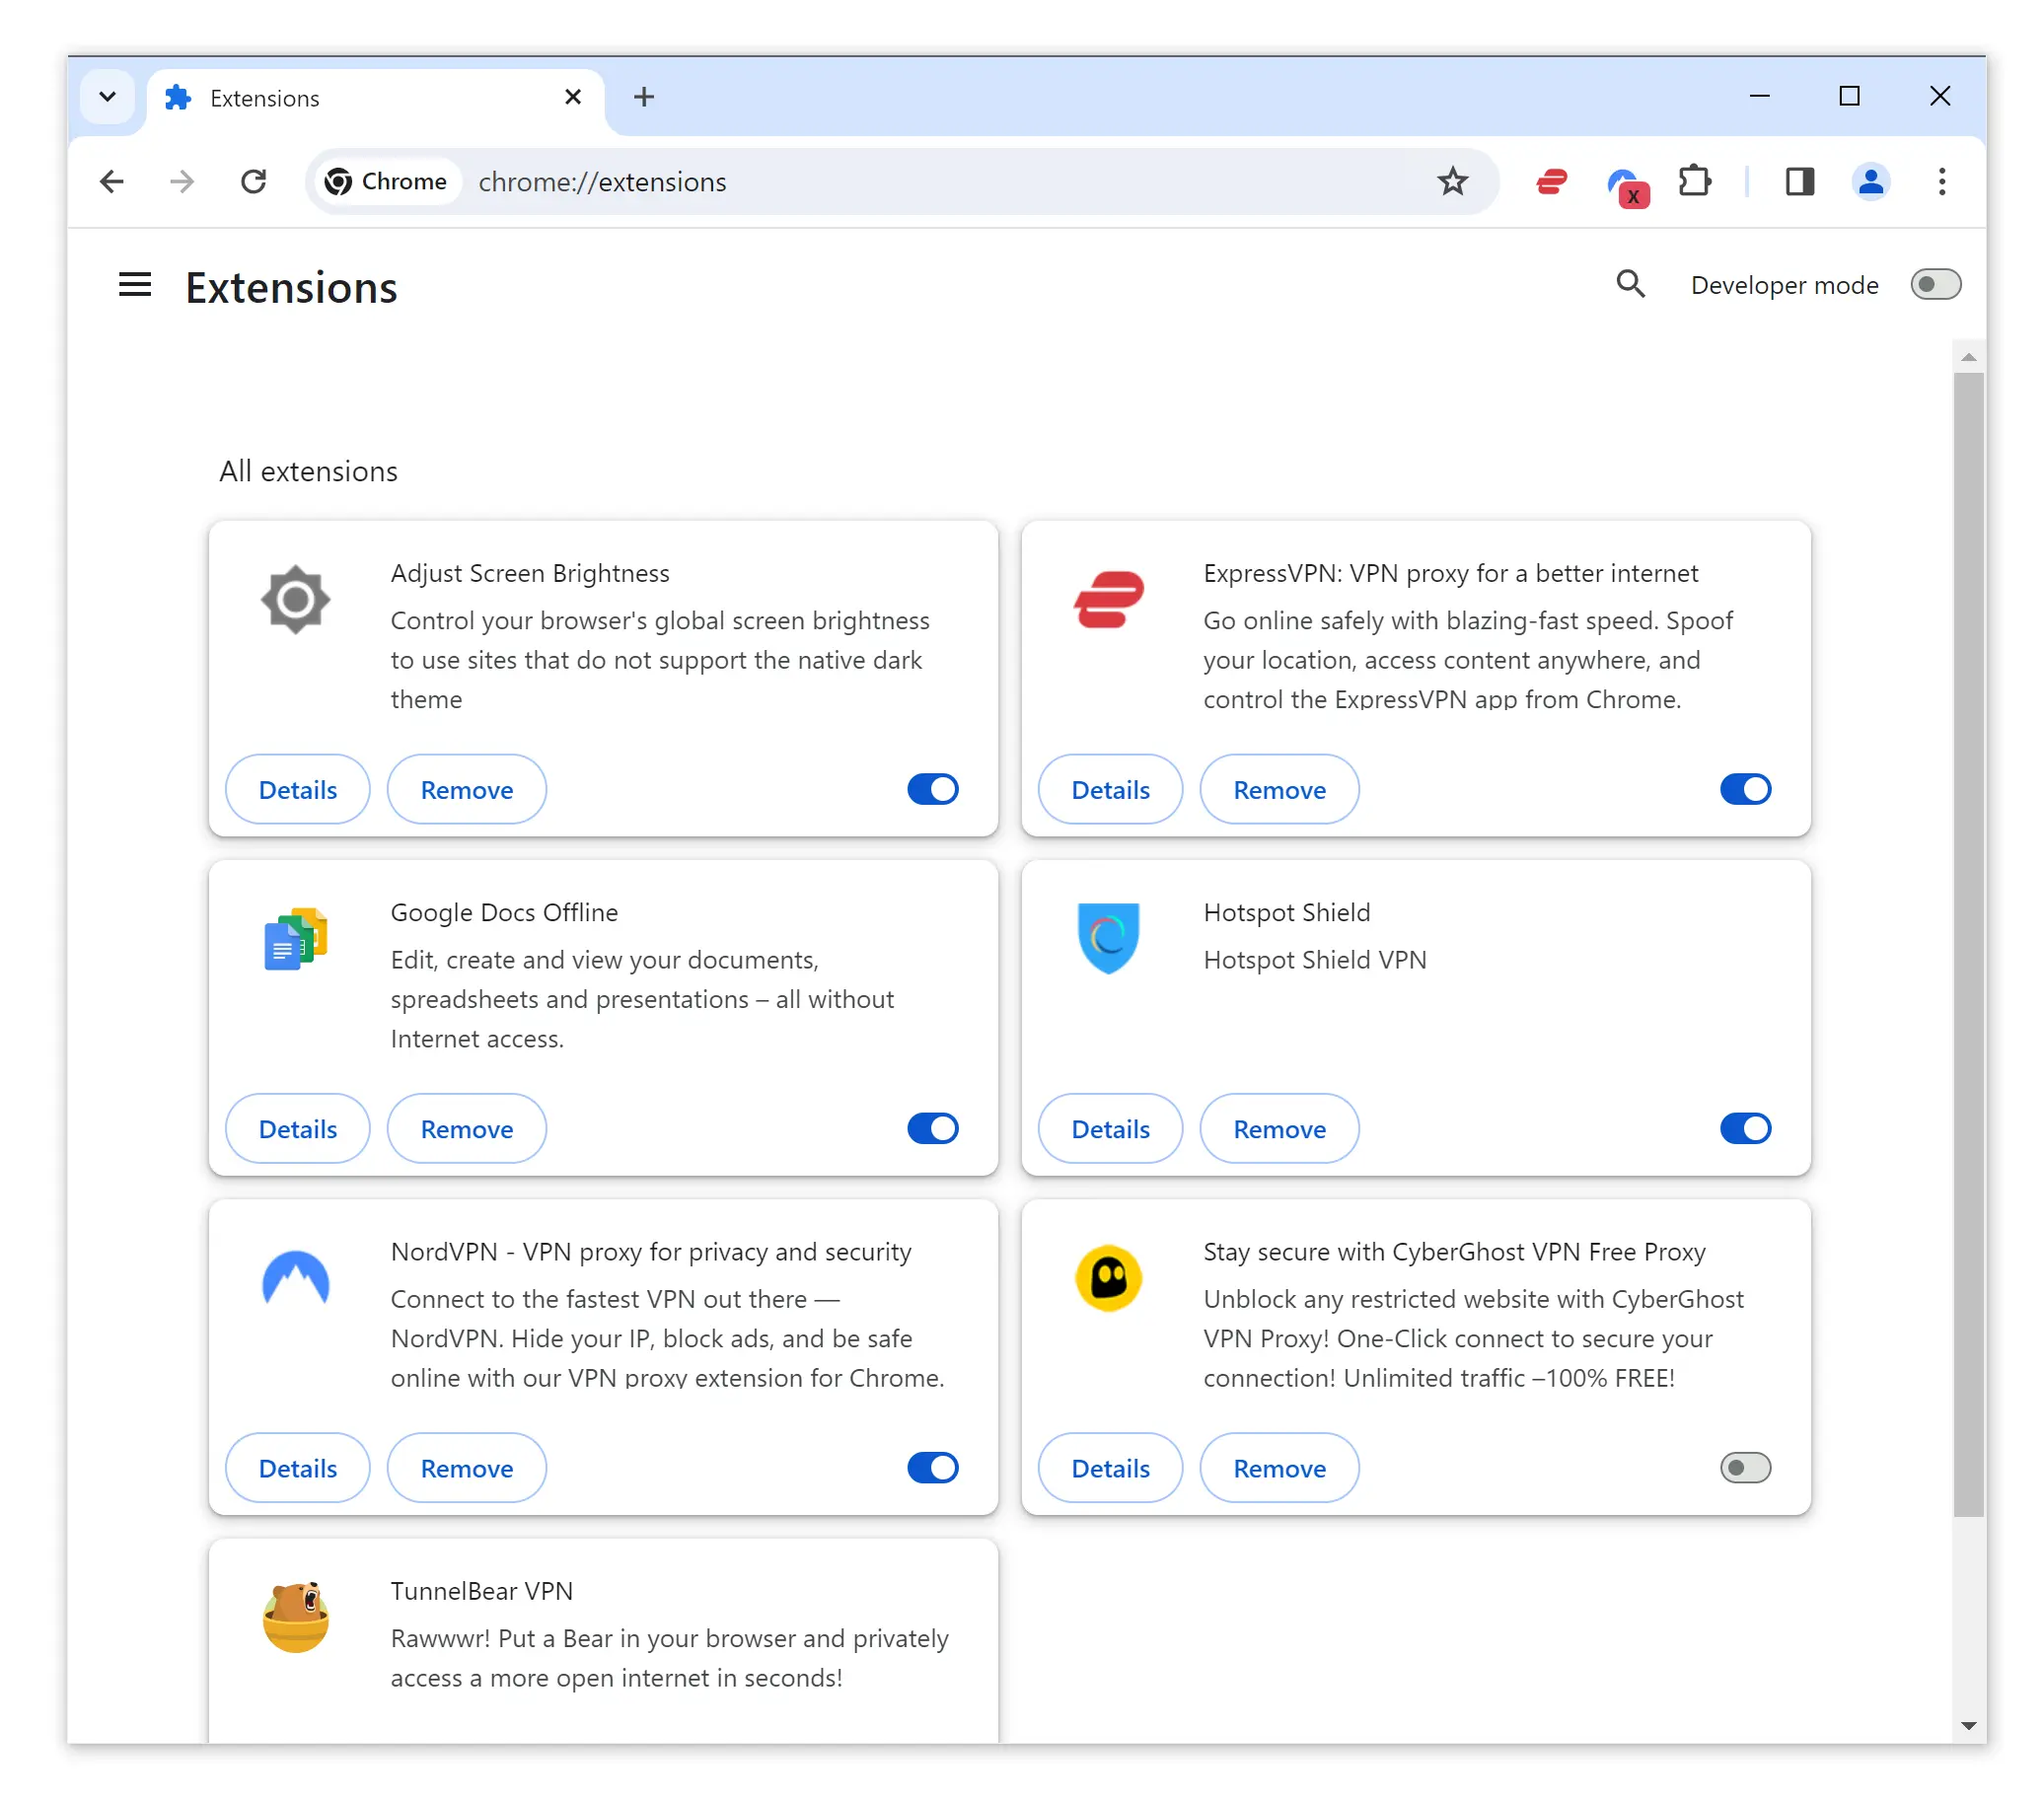 Full list of Chrome extensions